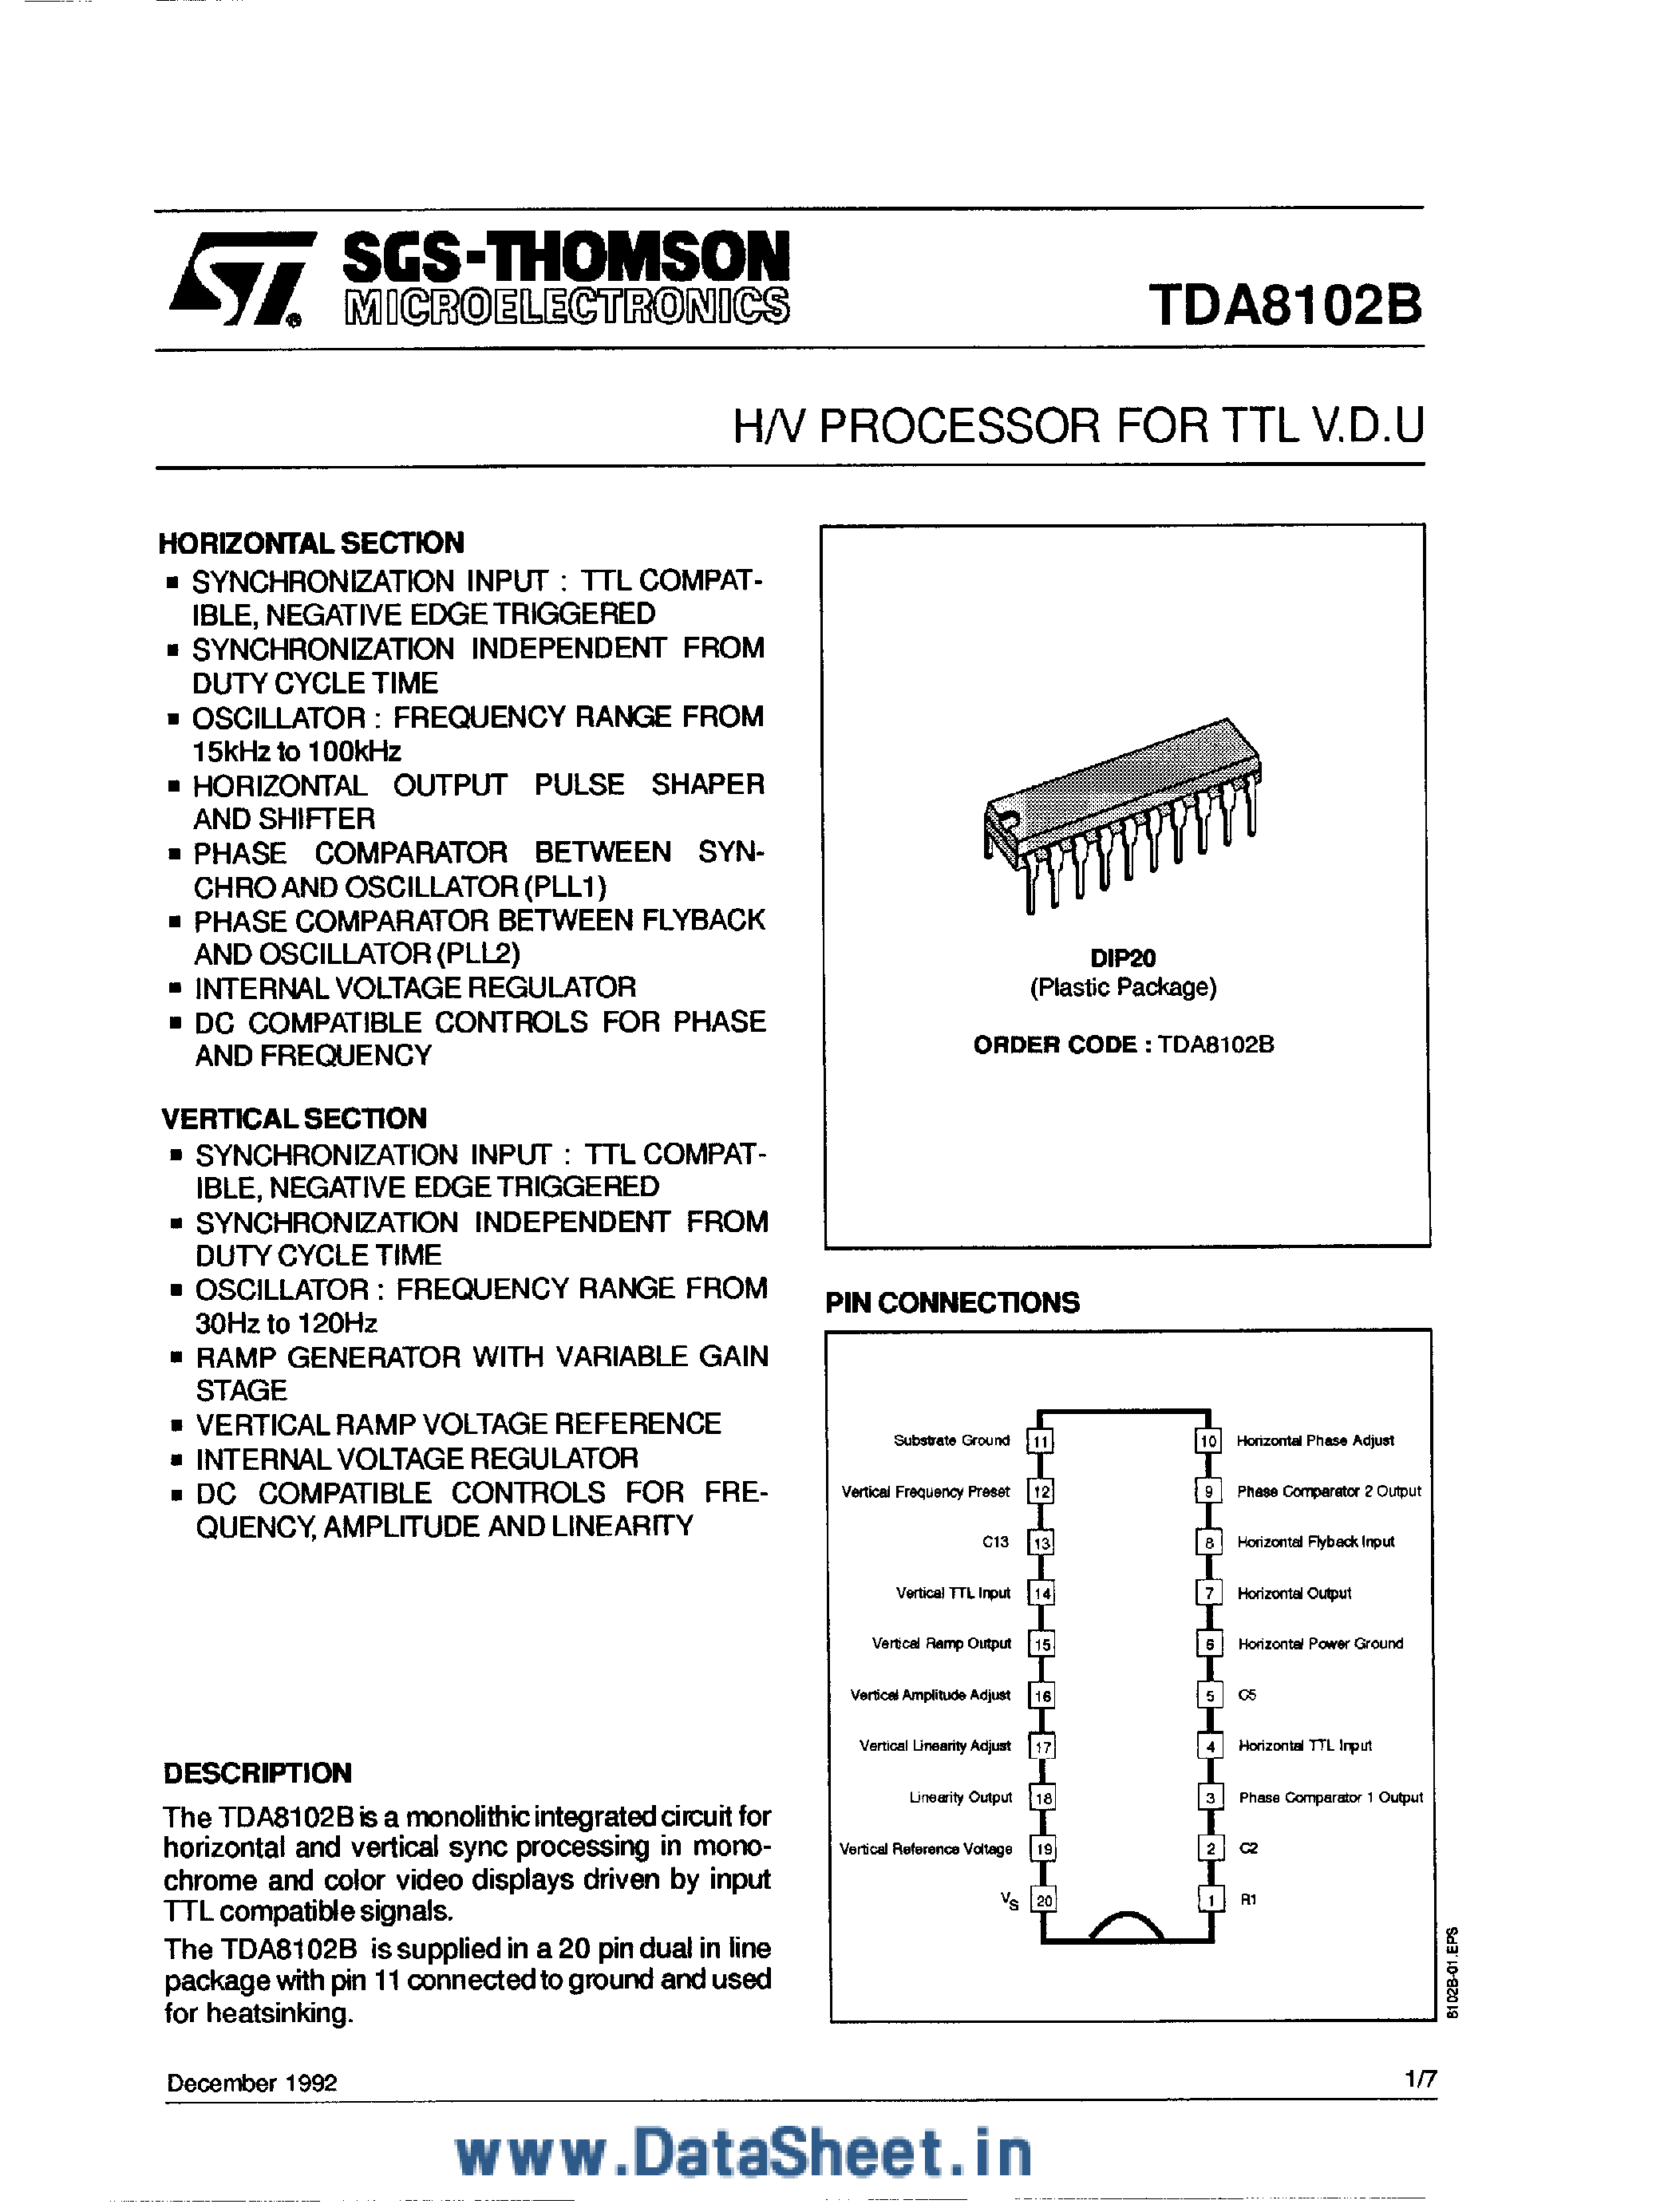 Даташит TDA8102B-H/V Processor for TTL VDU страница 1